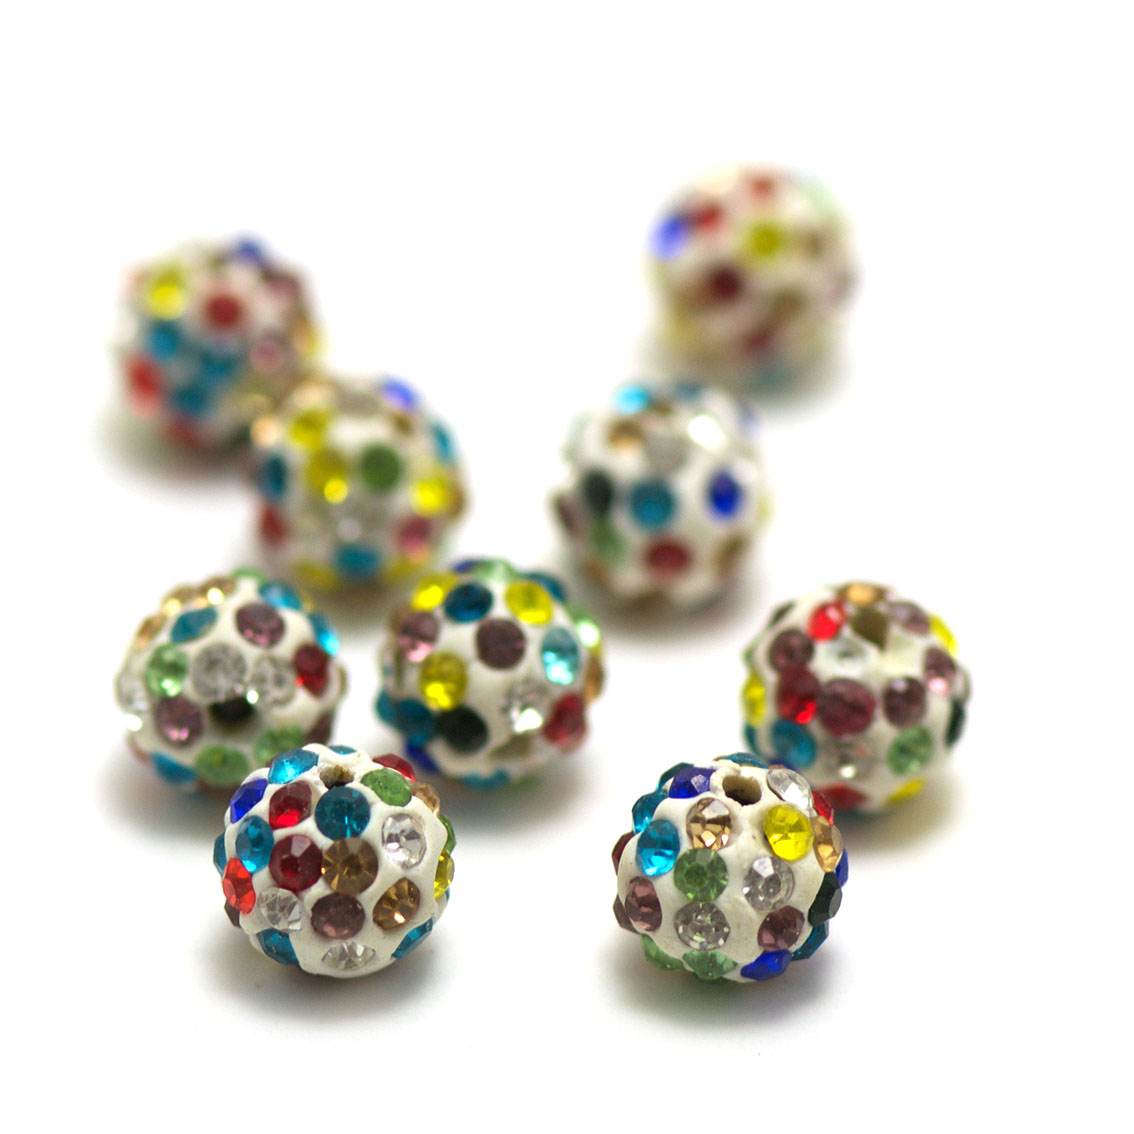 4 perles shamballa 10 mm strass multi-couleur sur fond blanc